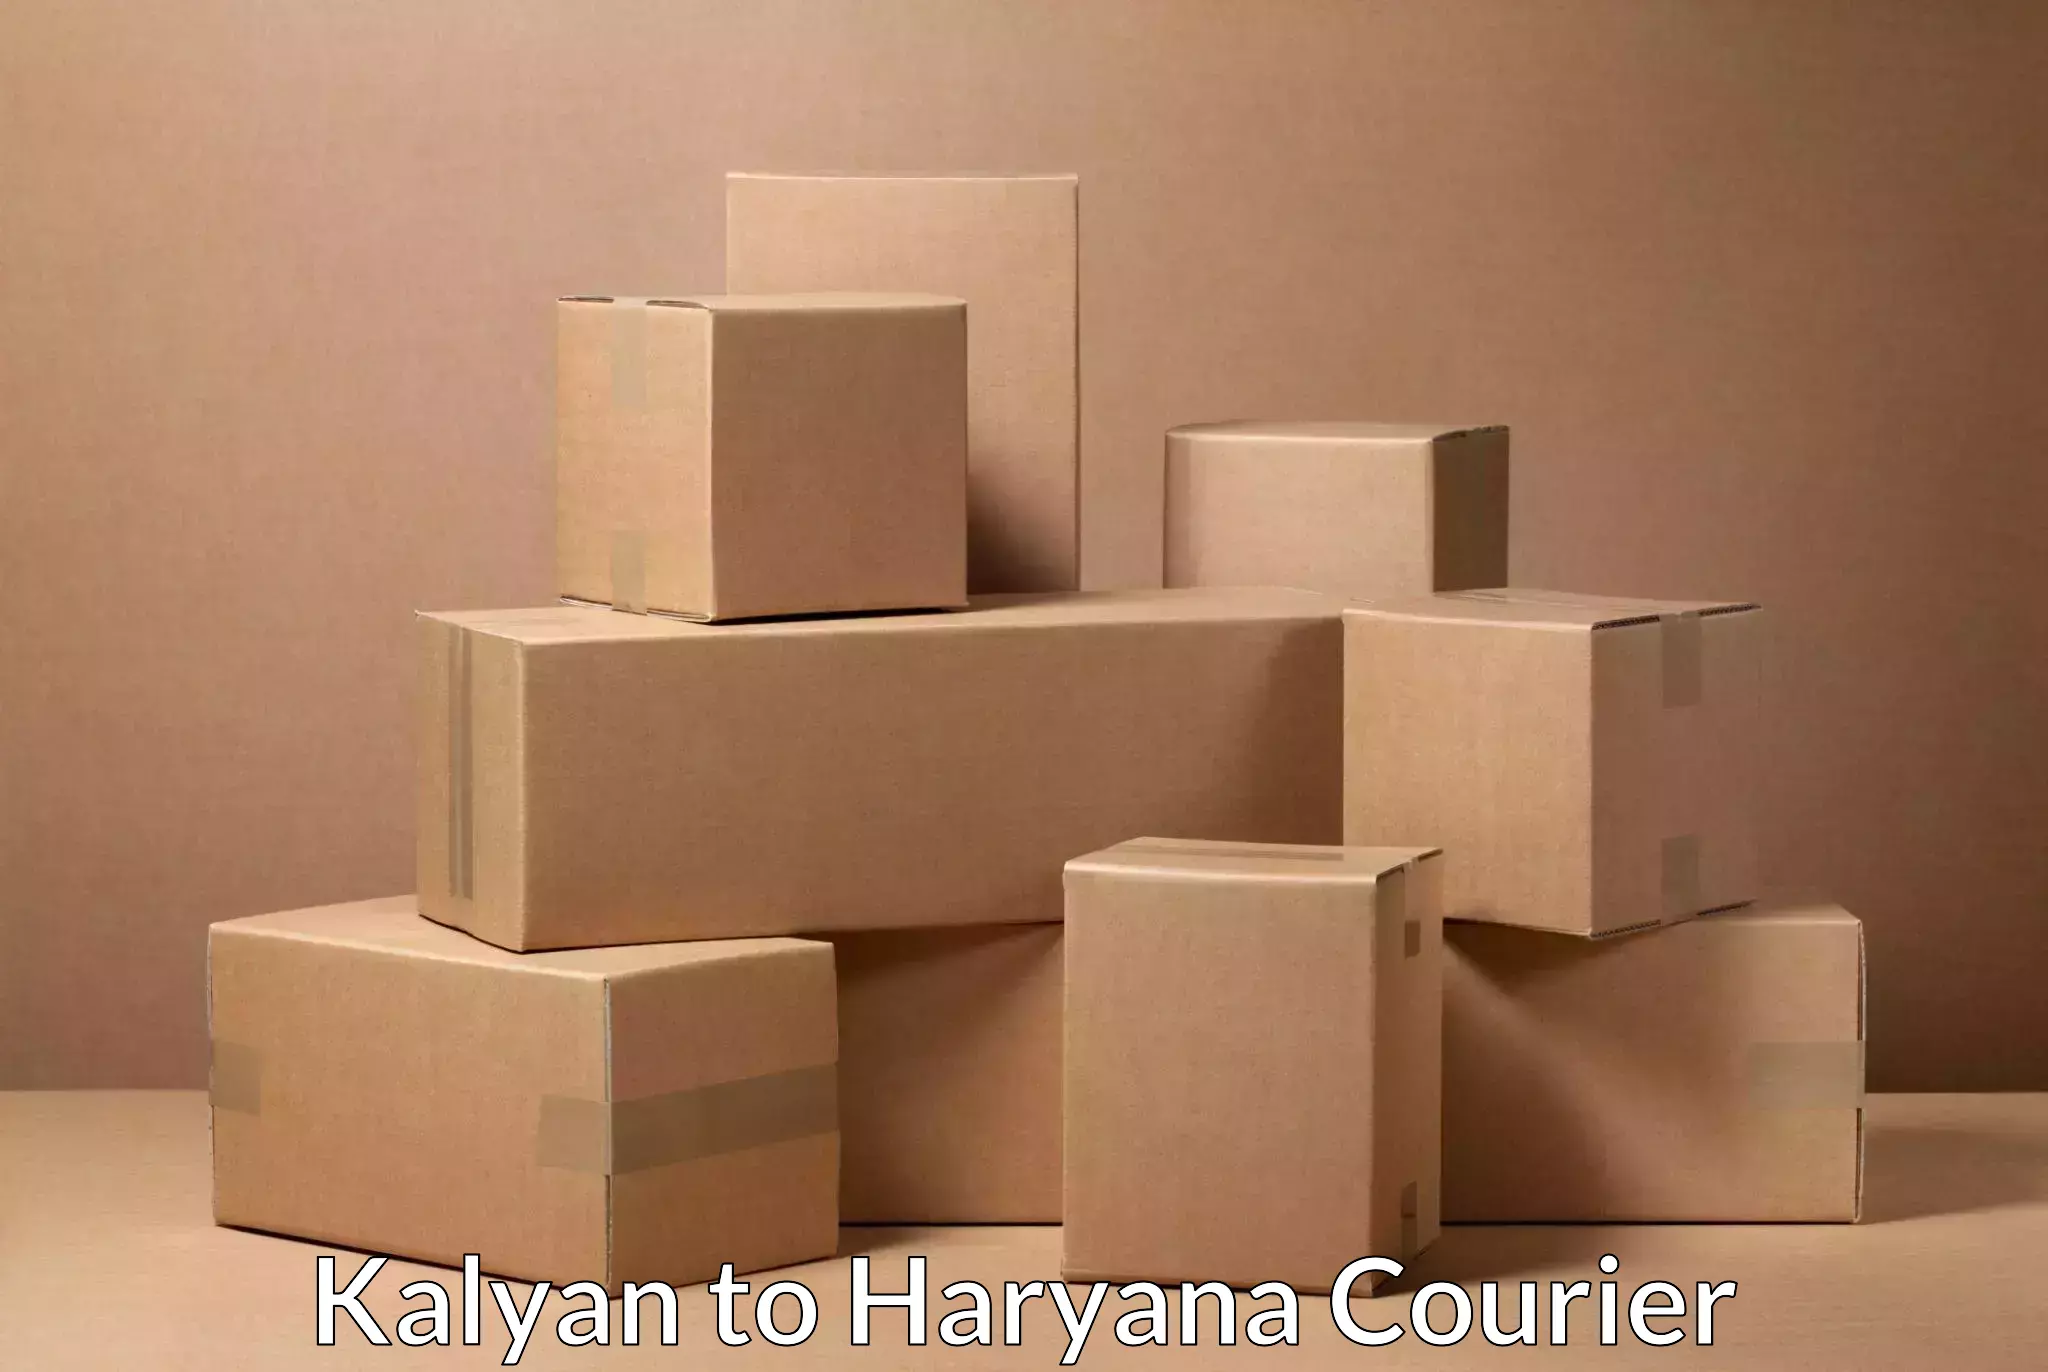 Courier service efficiency Kalyan to Chirya